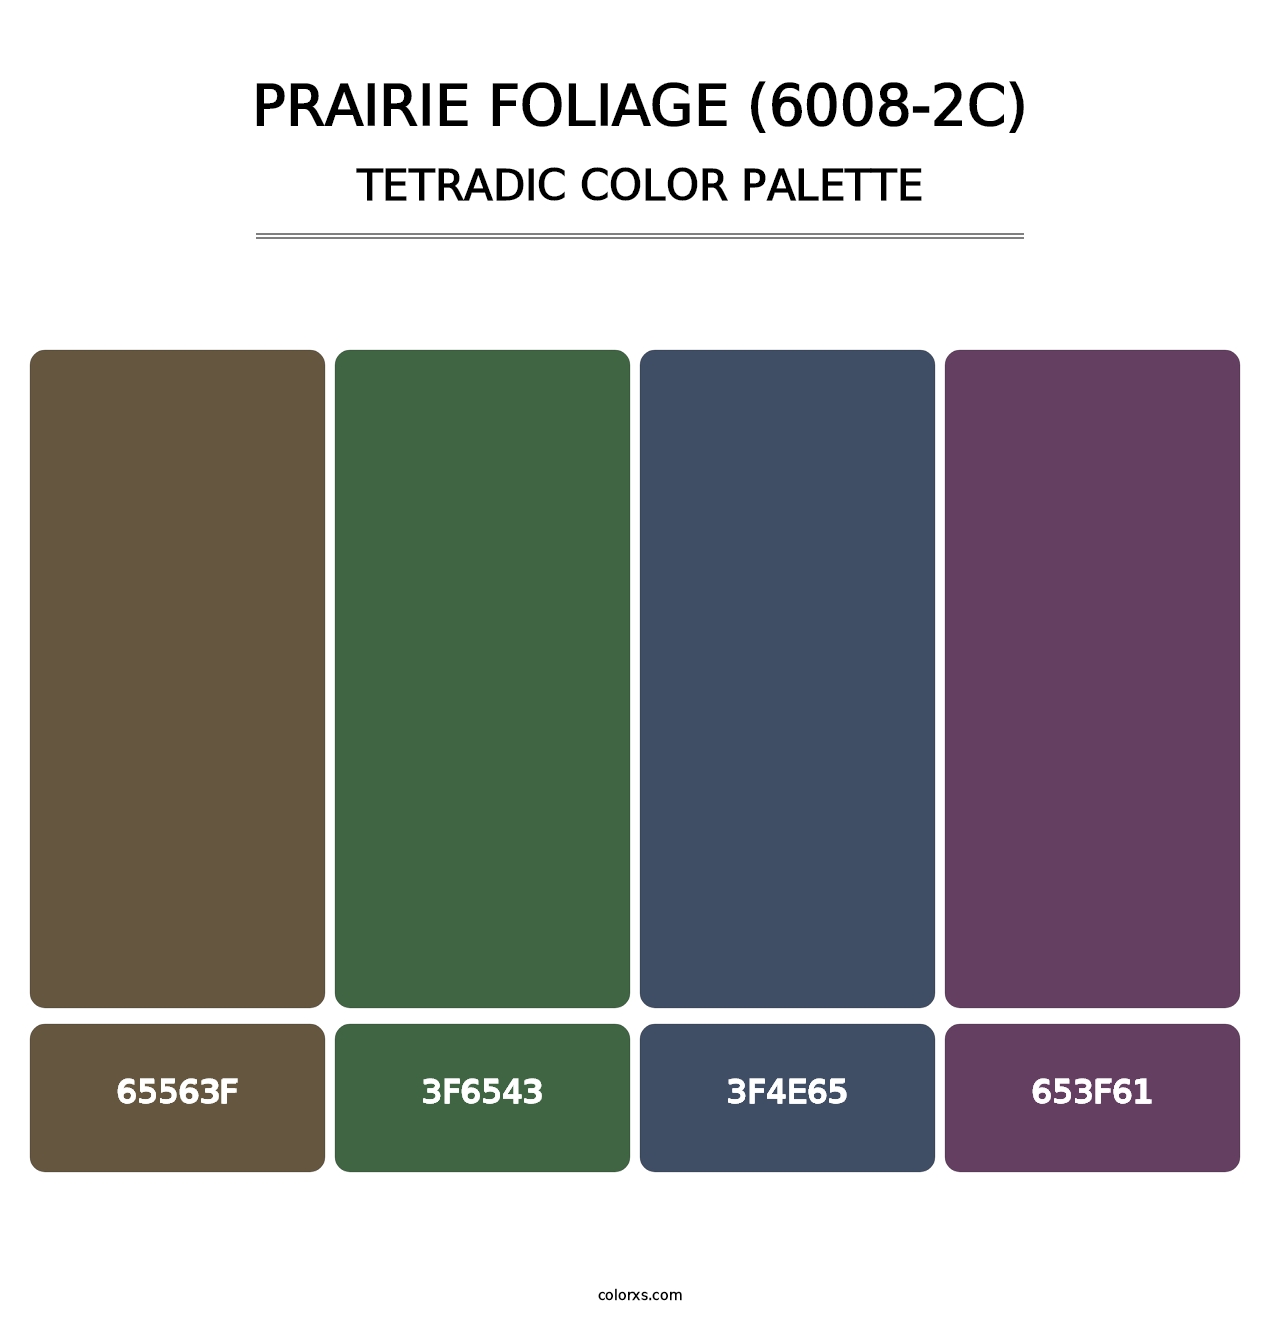 Prairie Foliage (6008-2C) - Tetradic Color Palette